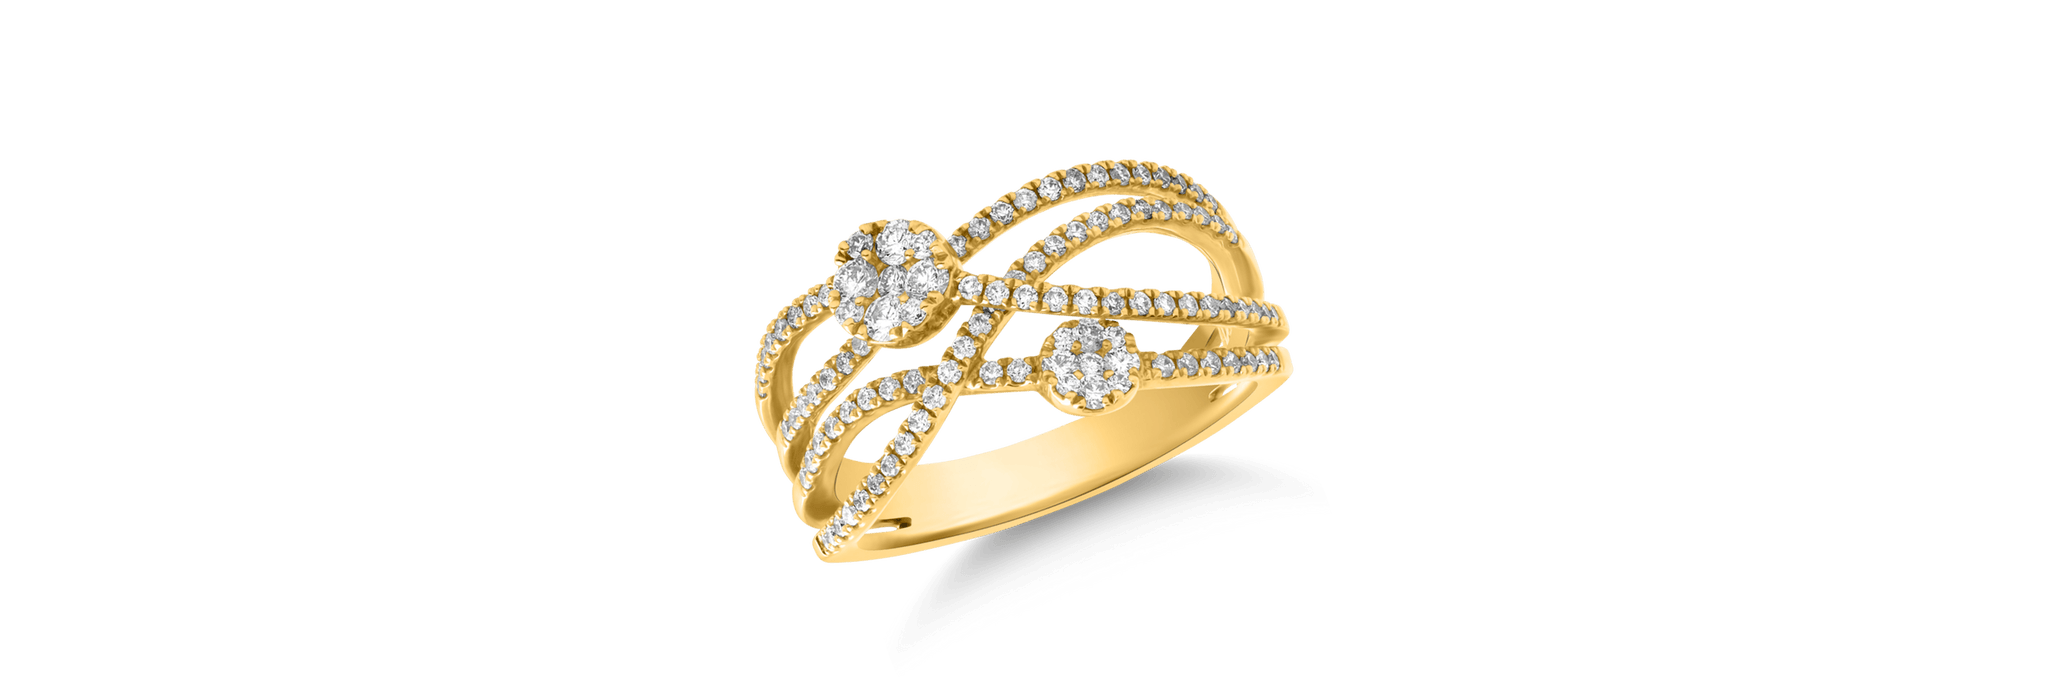 Inel din aur galben de 18K cu diamante de 0.54ct